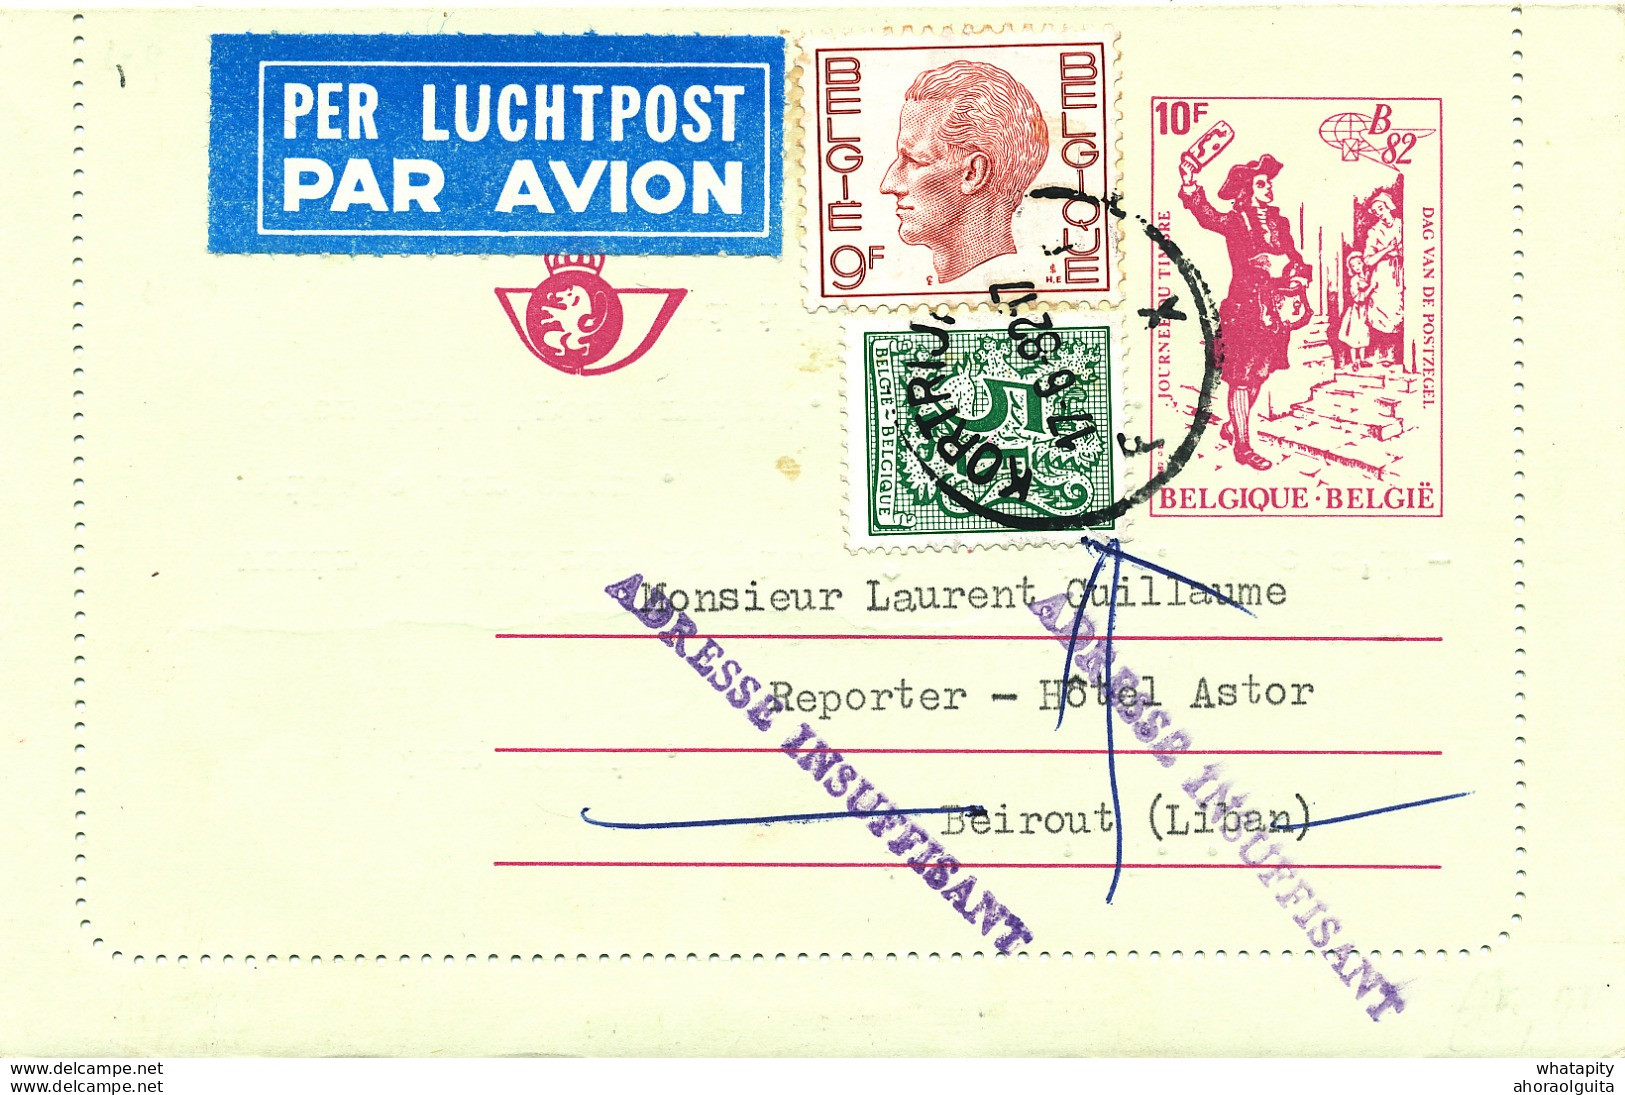 483/30 -- Carte-Lettre Moderne PAR AVION - Tarif 24 F KORTRIJK 1984 Vers BEYROUTH Liban - Griffe Adresse Insuffisante - Cartes-lettres